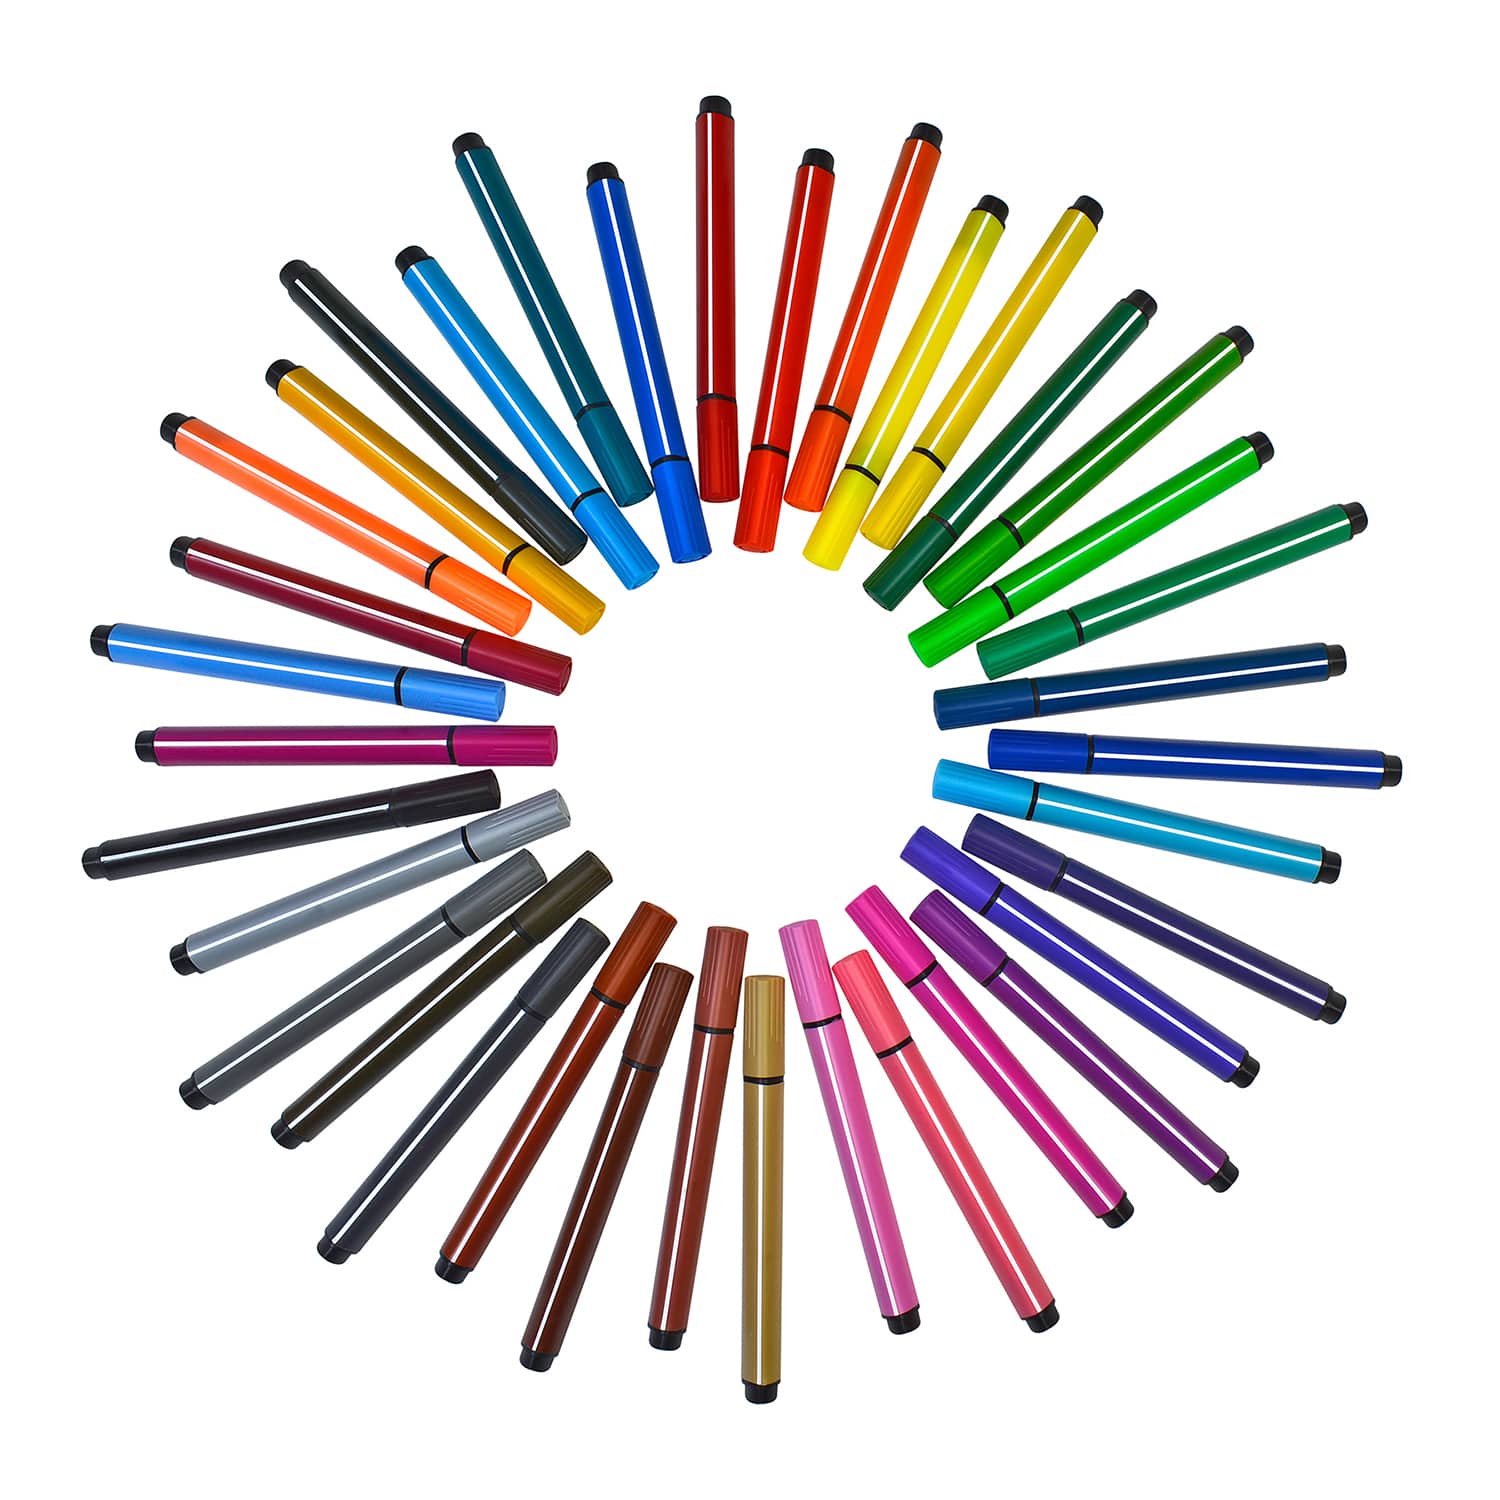 The Pencil Grip Magic Stix 48 Color Triangular Washable Markers